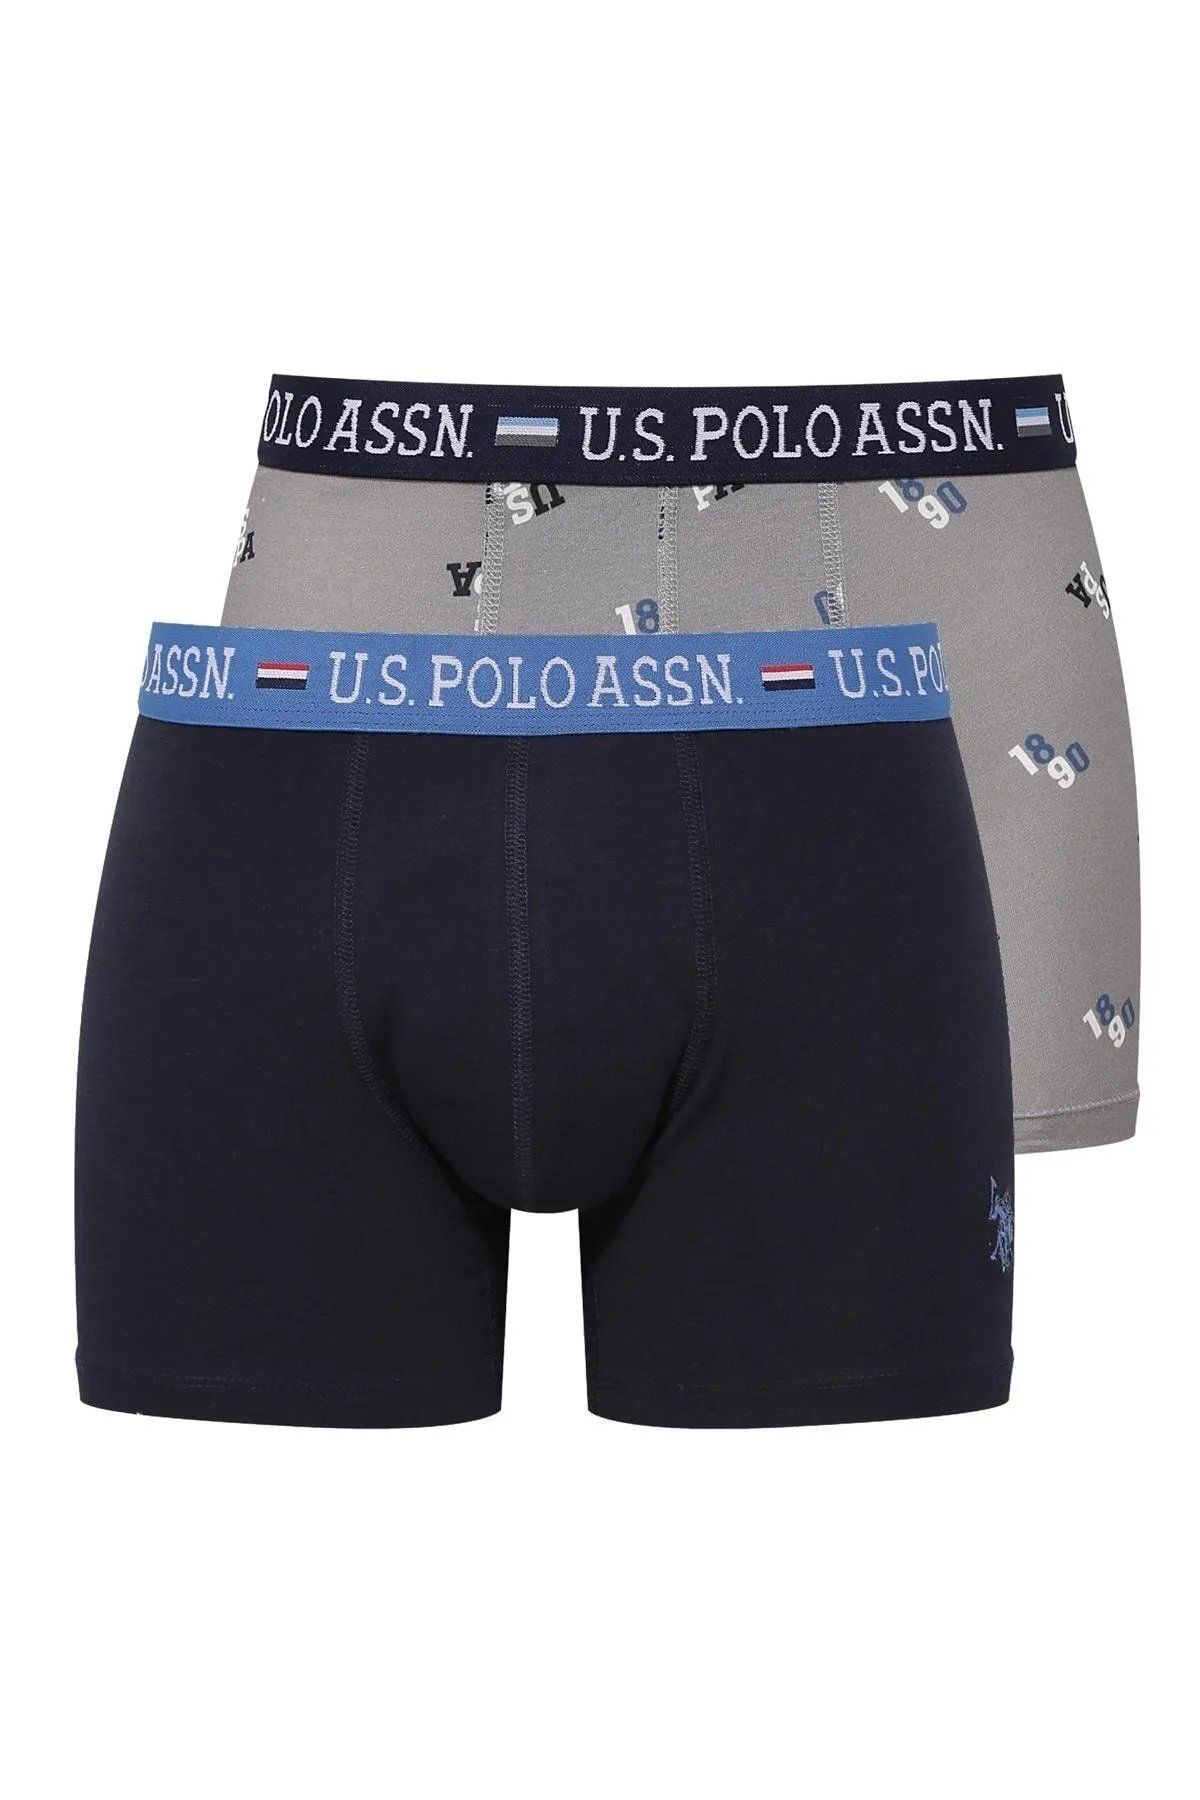 U.S. Polo Assn. U.S. Polo Assn. - Erkek İç Giyim Modal Gri Baskılı & Lacivert 2'li Boxer Set L.2.0.1.L.0.86